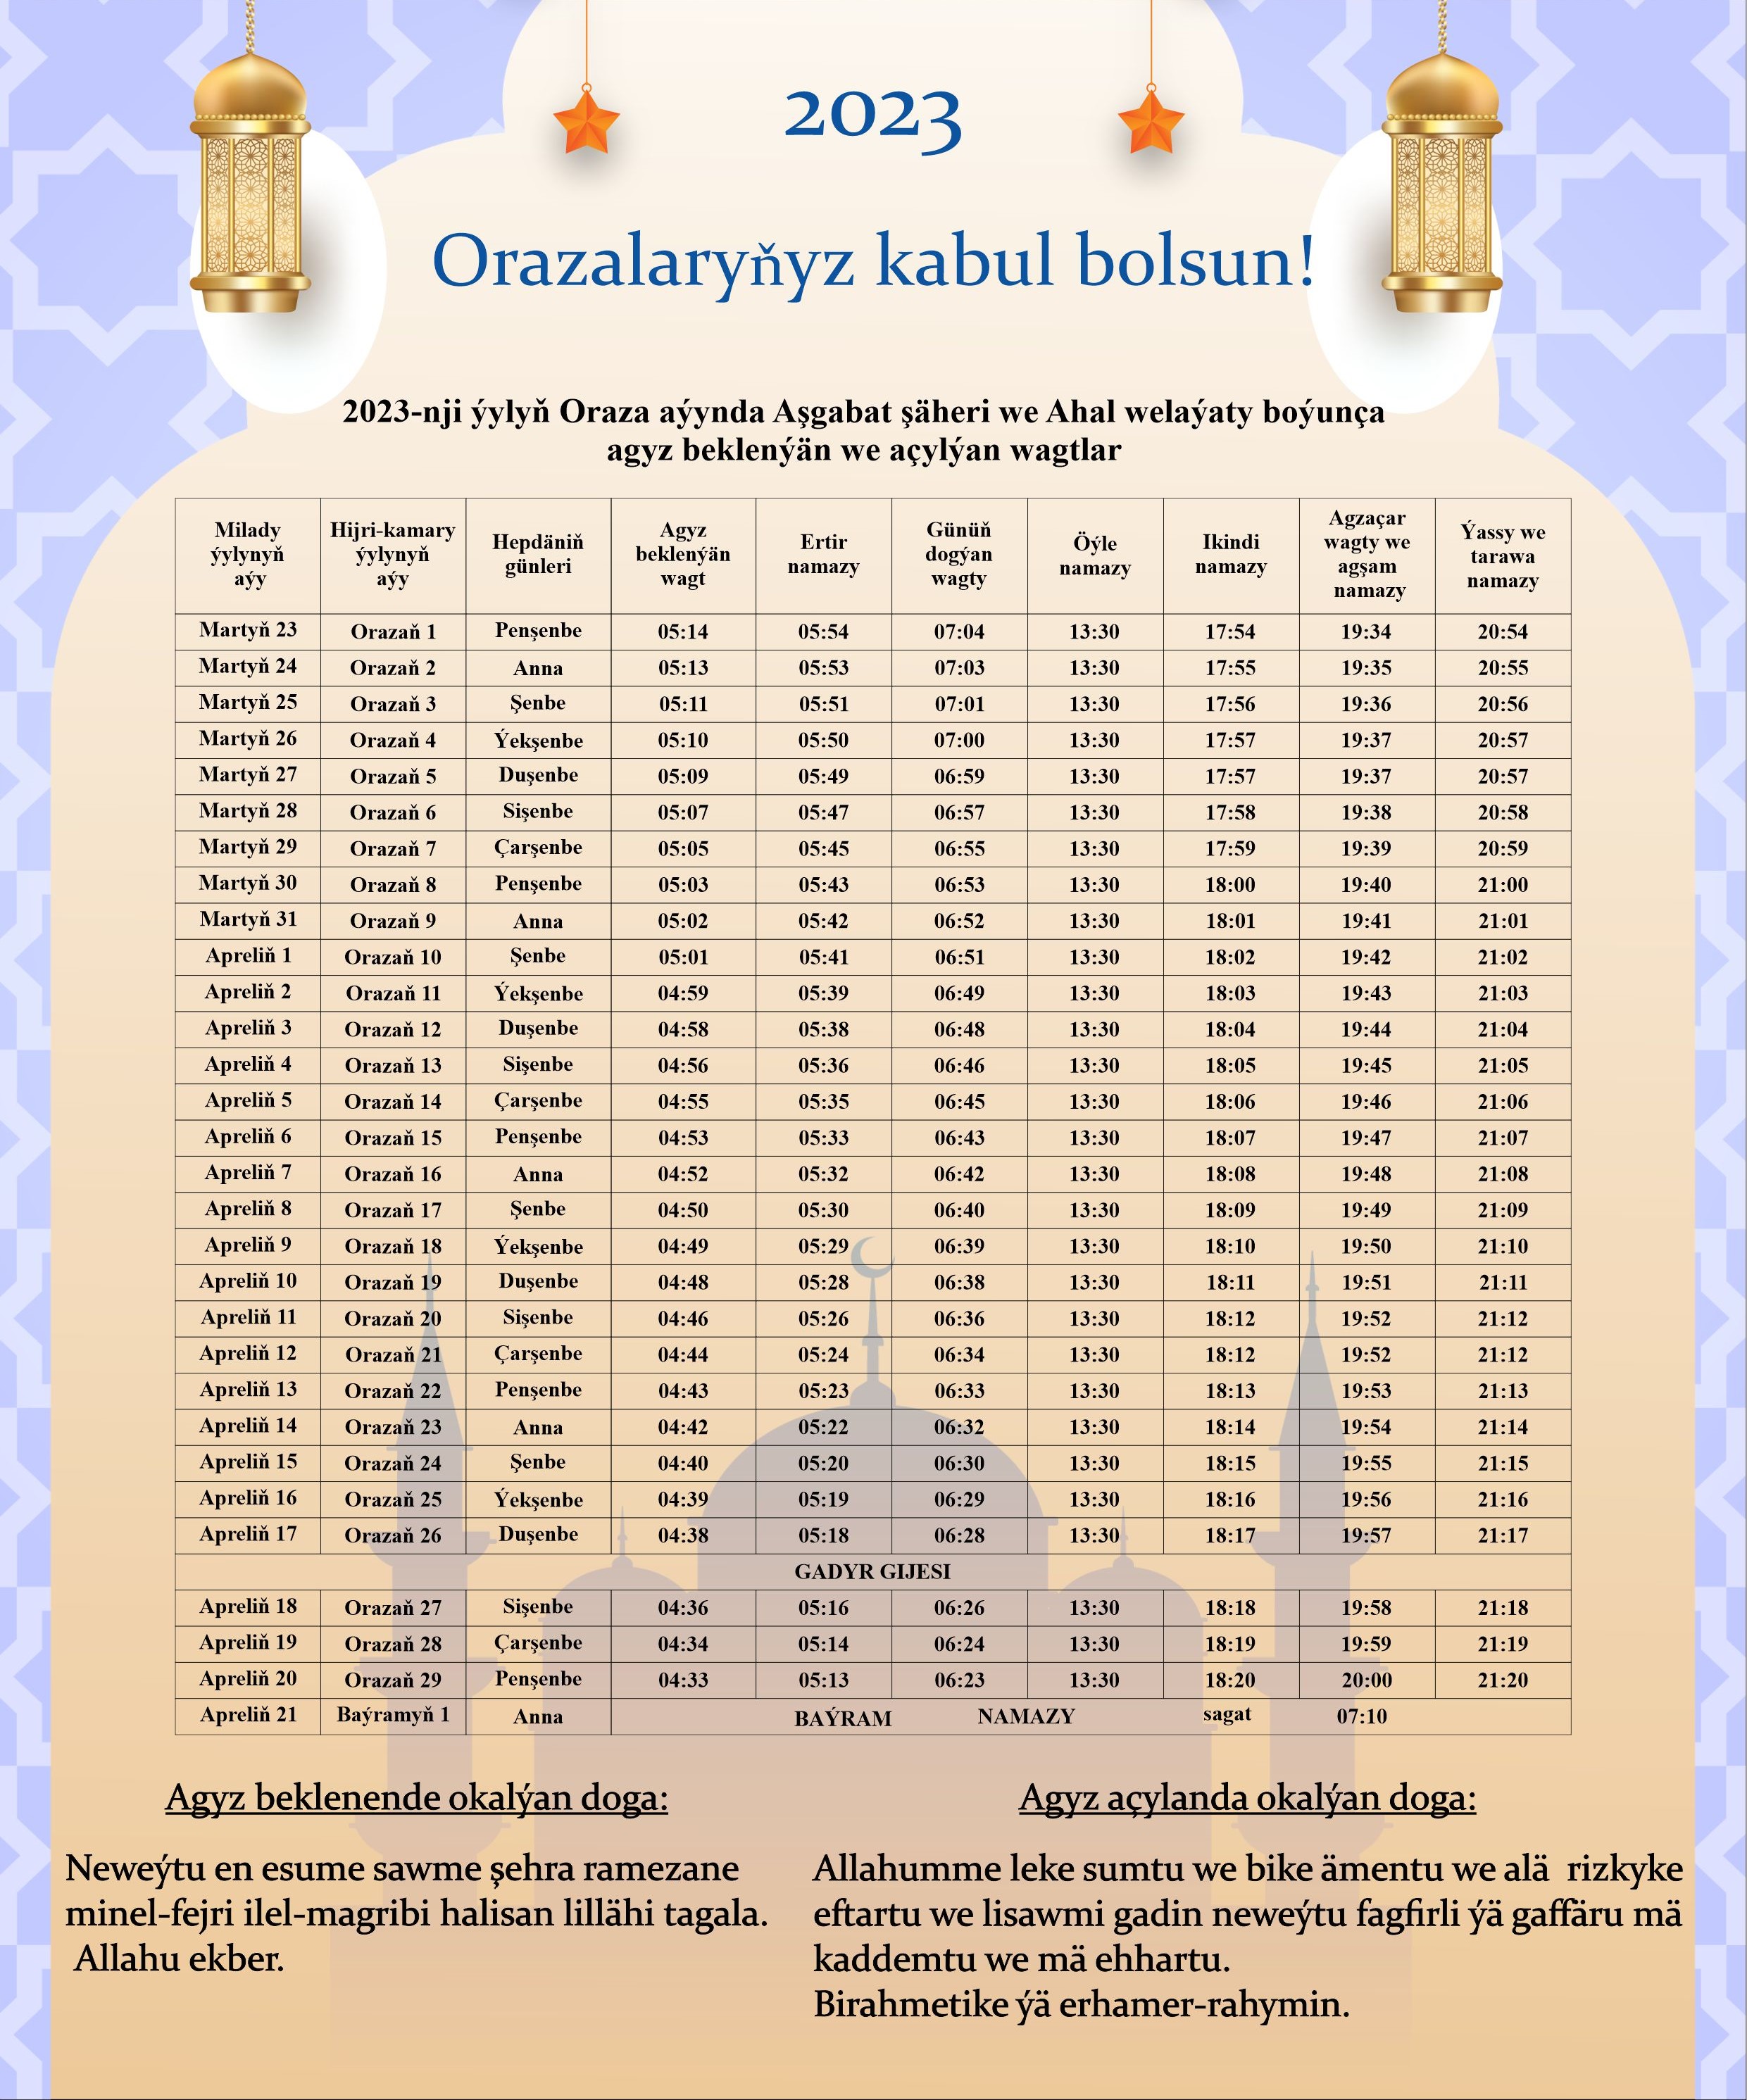 Мусульманский календарь поста рамадан